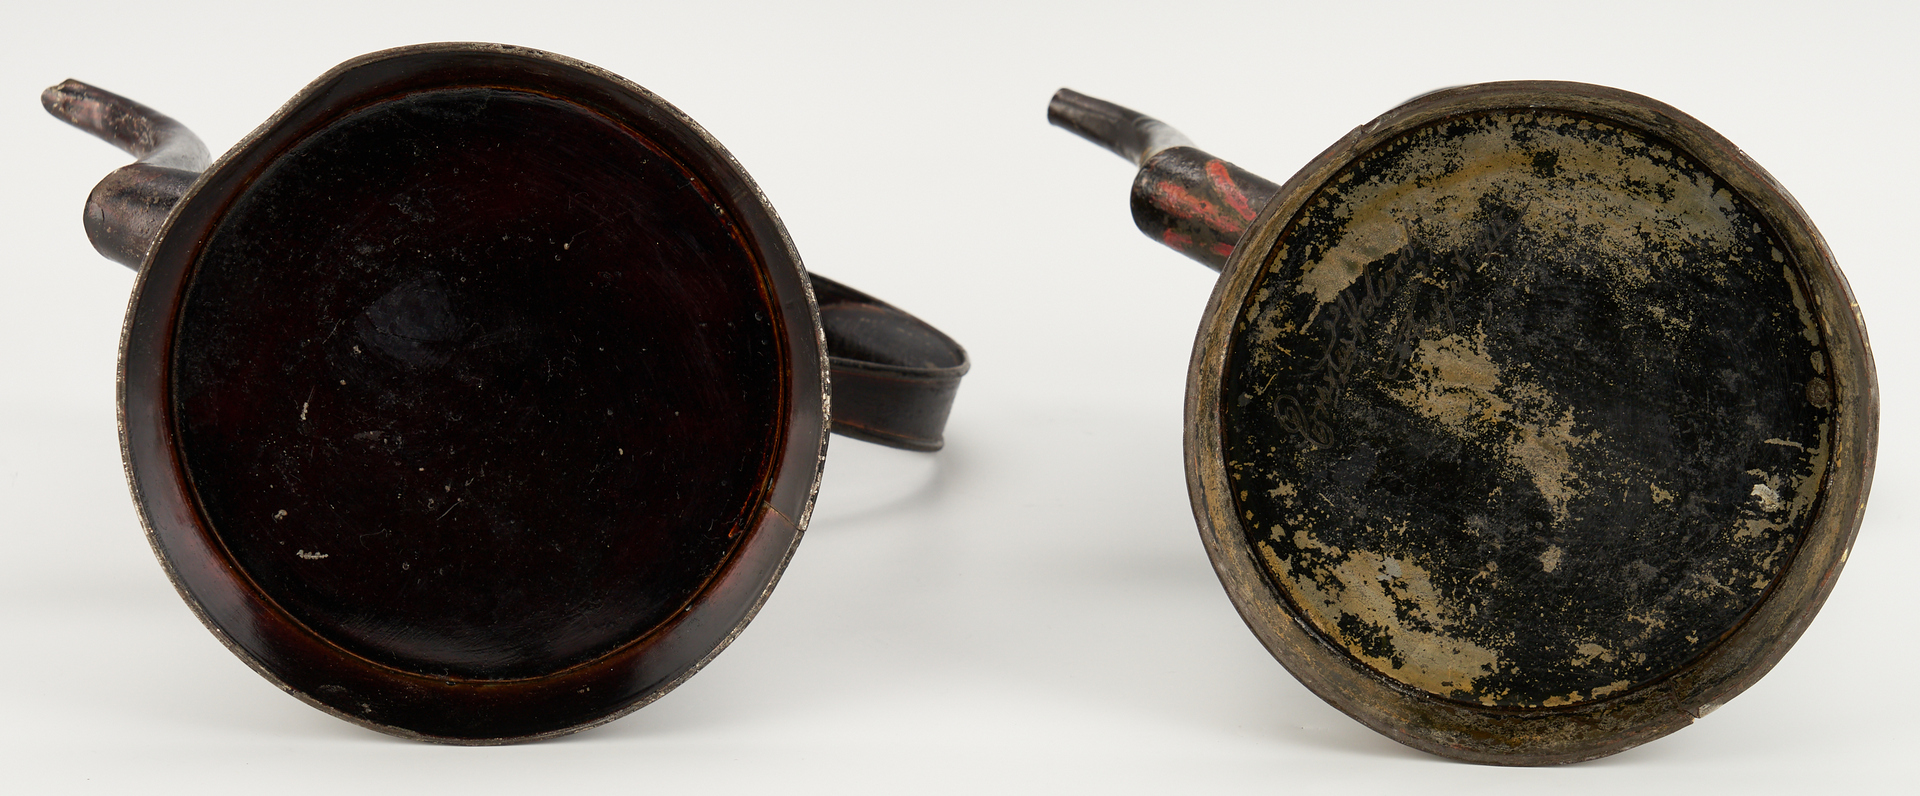 Lot 267: Two Tole Coffee Pots, Jug and Mug, 19th C.